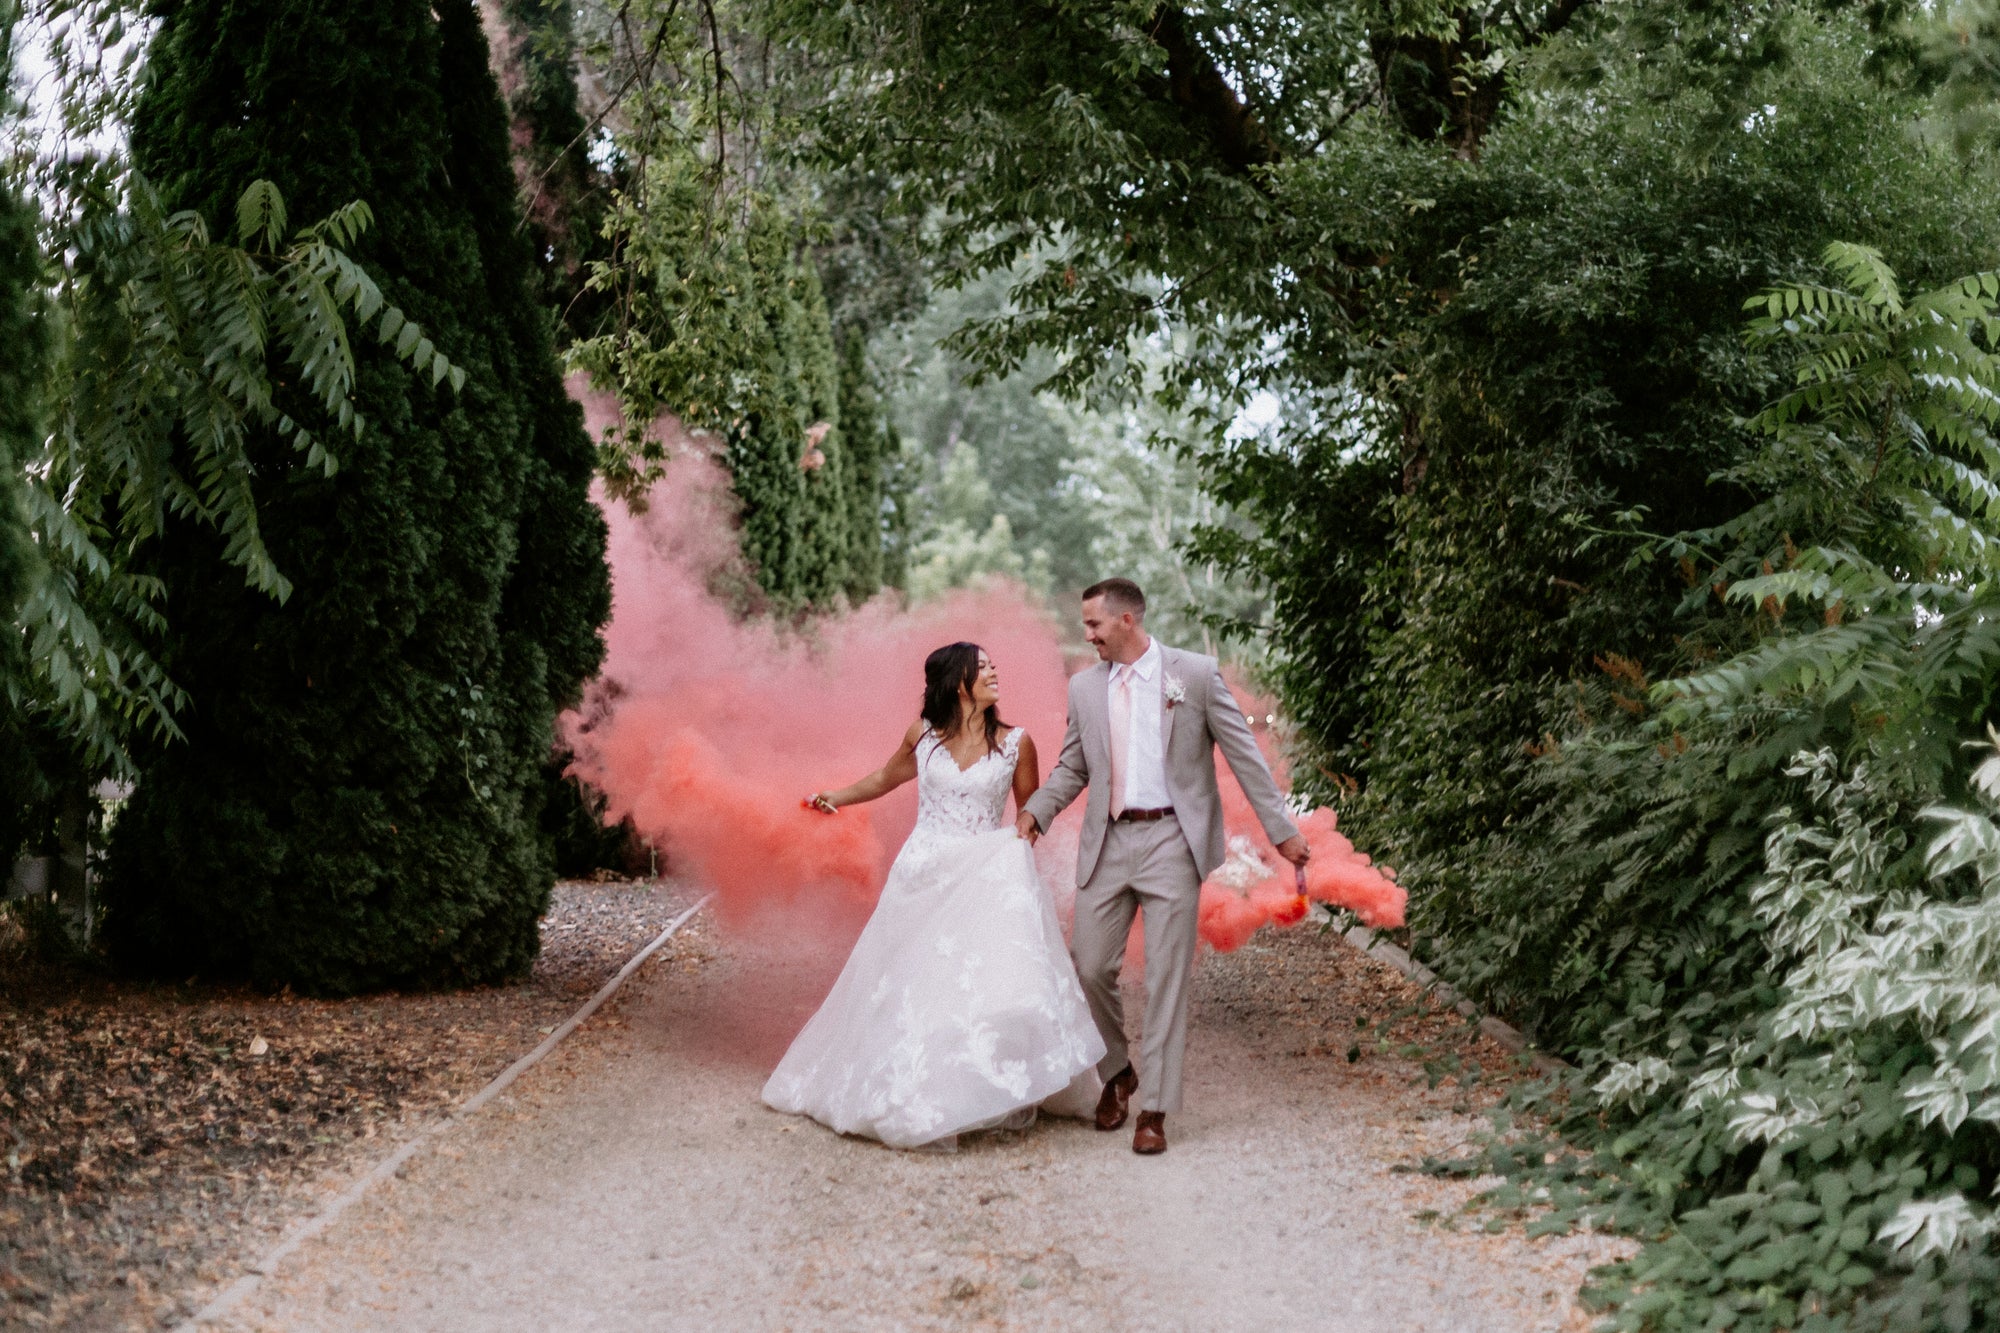 Adding a Dash of Drama: Using Smoke Bombs to Elevate Your Wedding Celebration